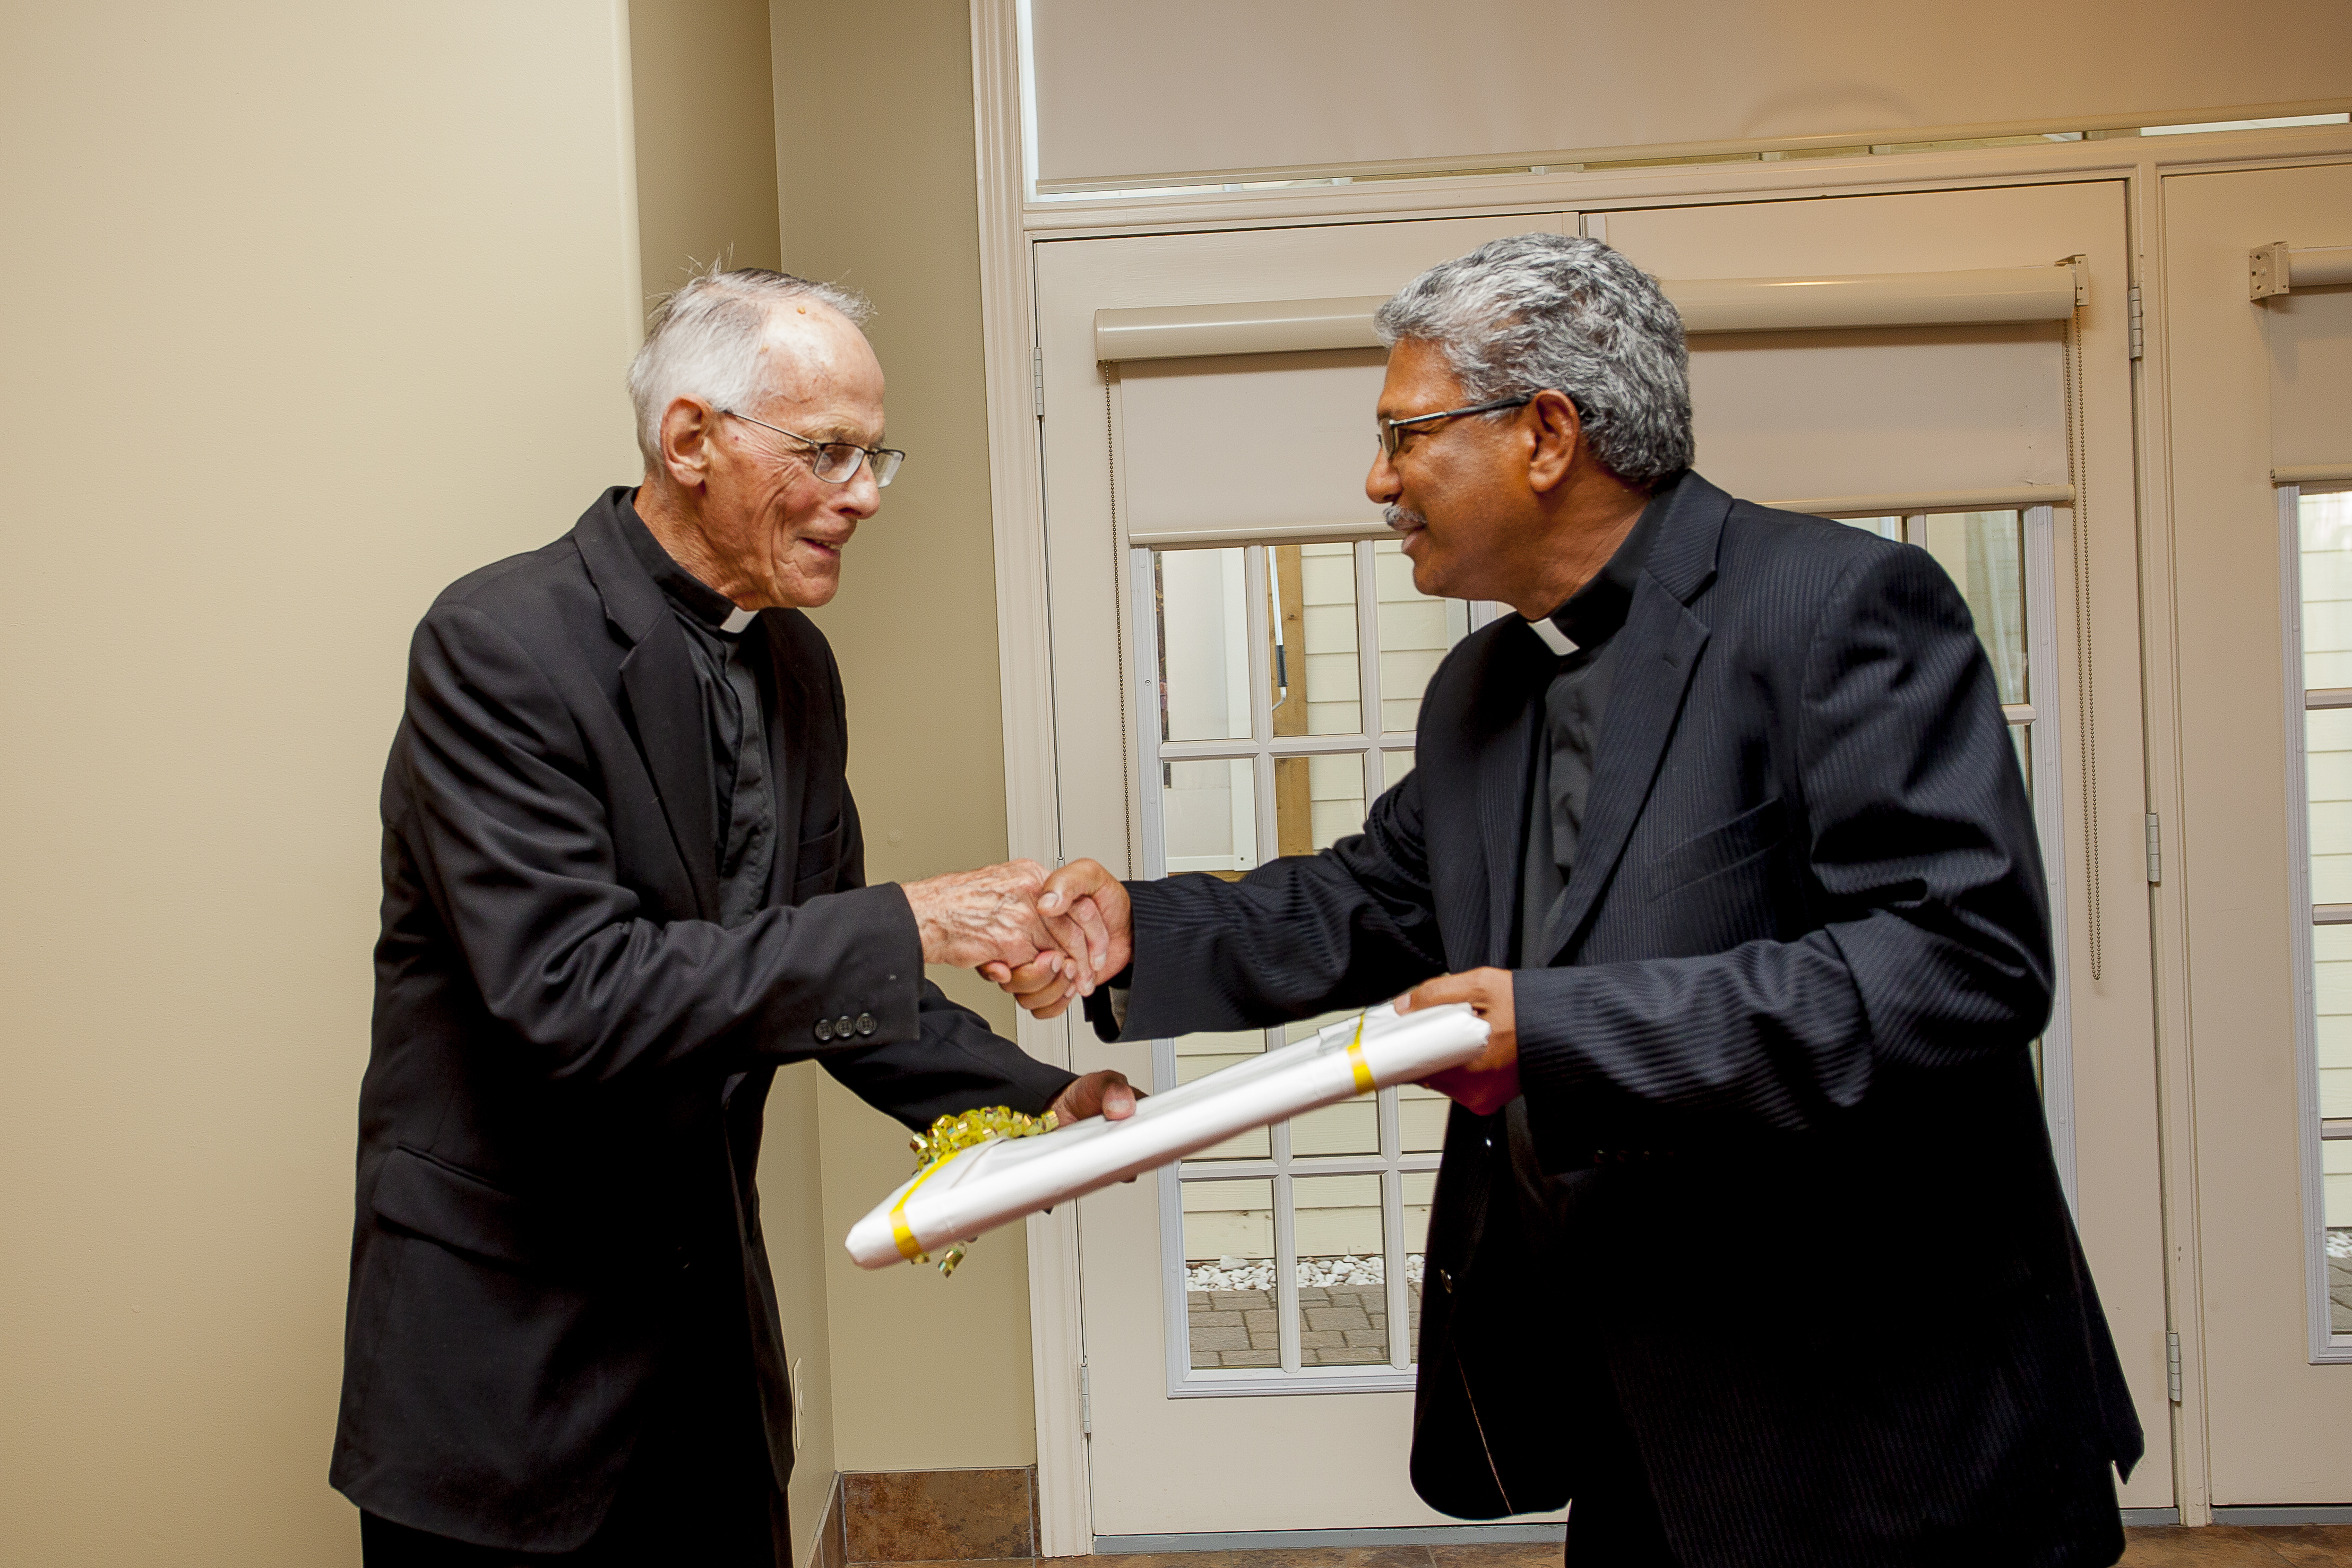 Fr. Joseph congratulates Msgr. John Pilkauskas on his 50th Ordination Anniversary and presents gift